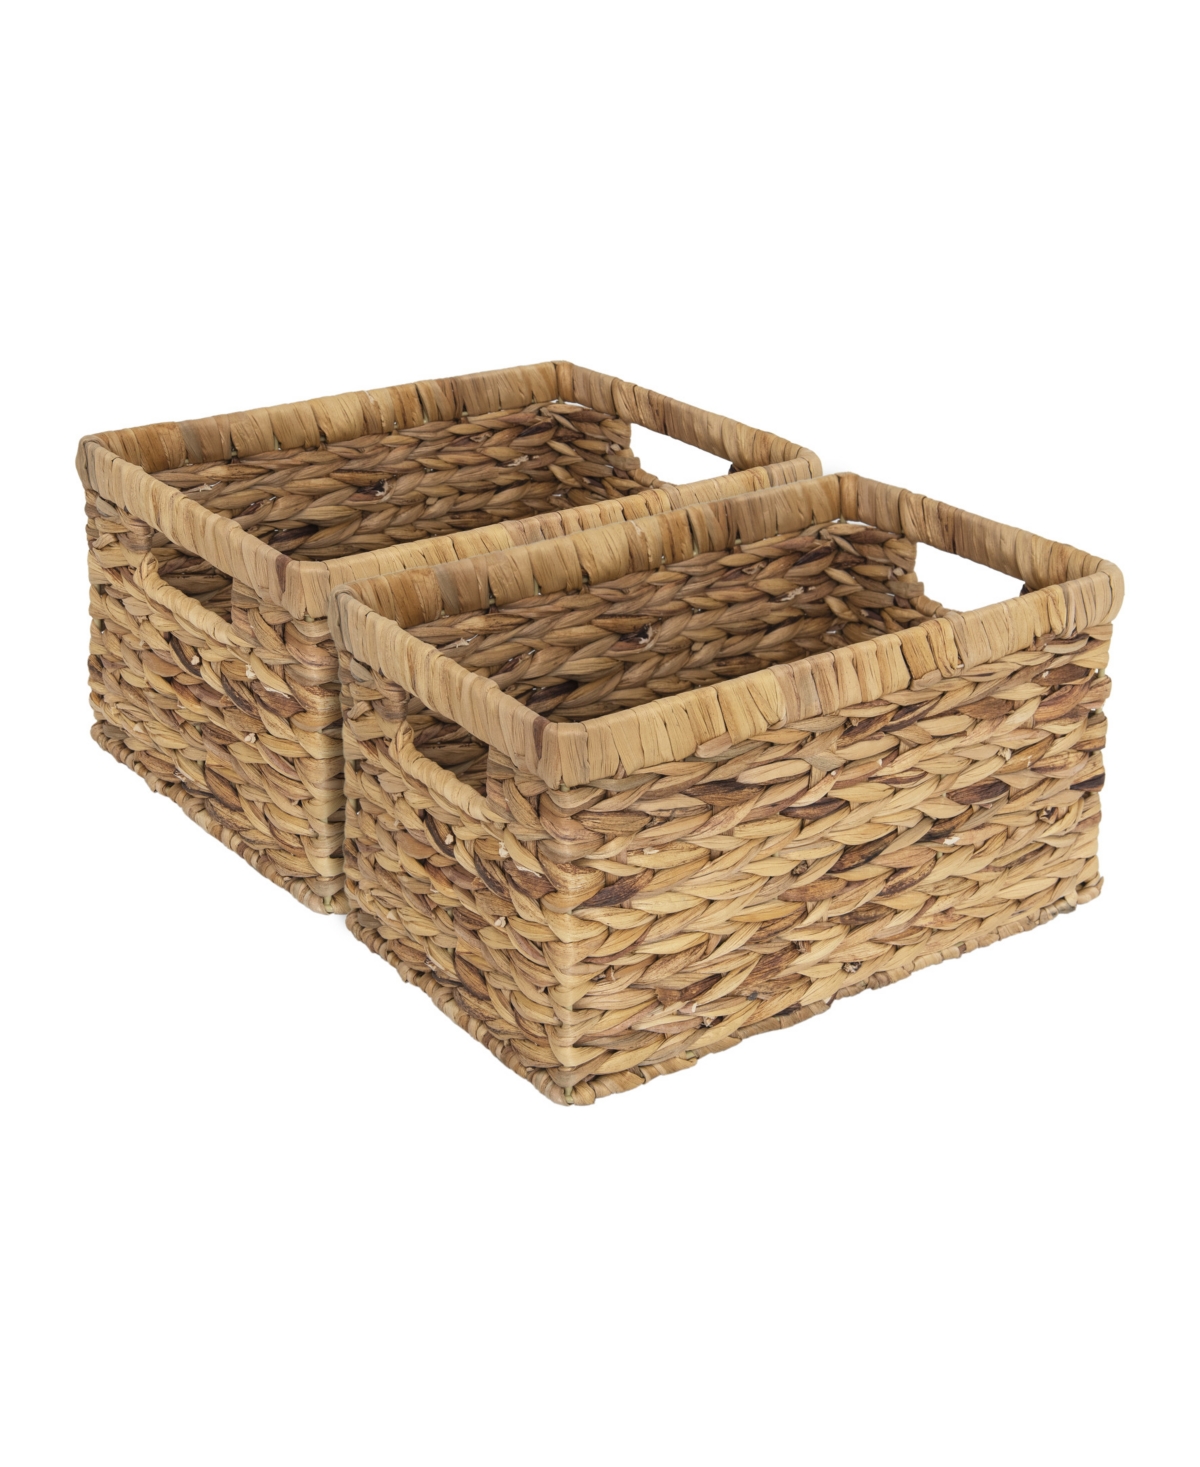 Wethinkstorage Set Of 2 12.5l Hand-woven Sea Grass Basket In Natural